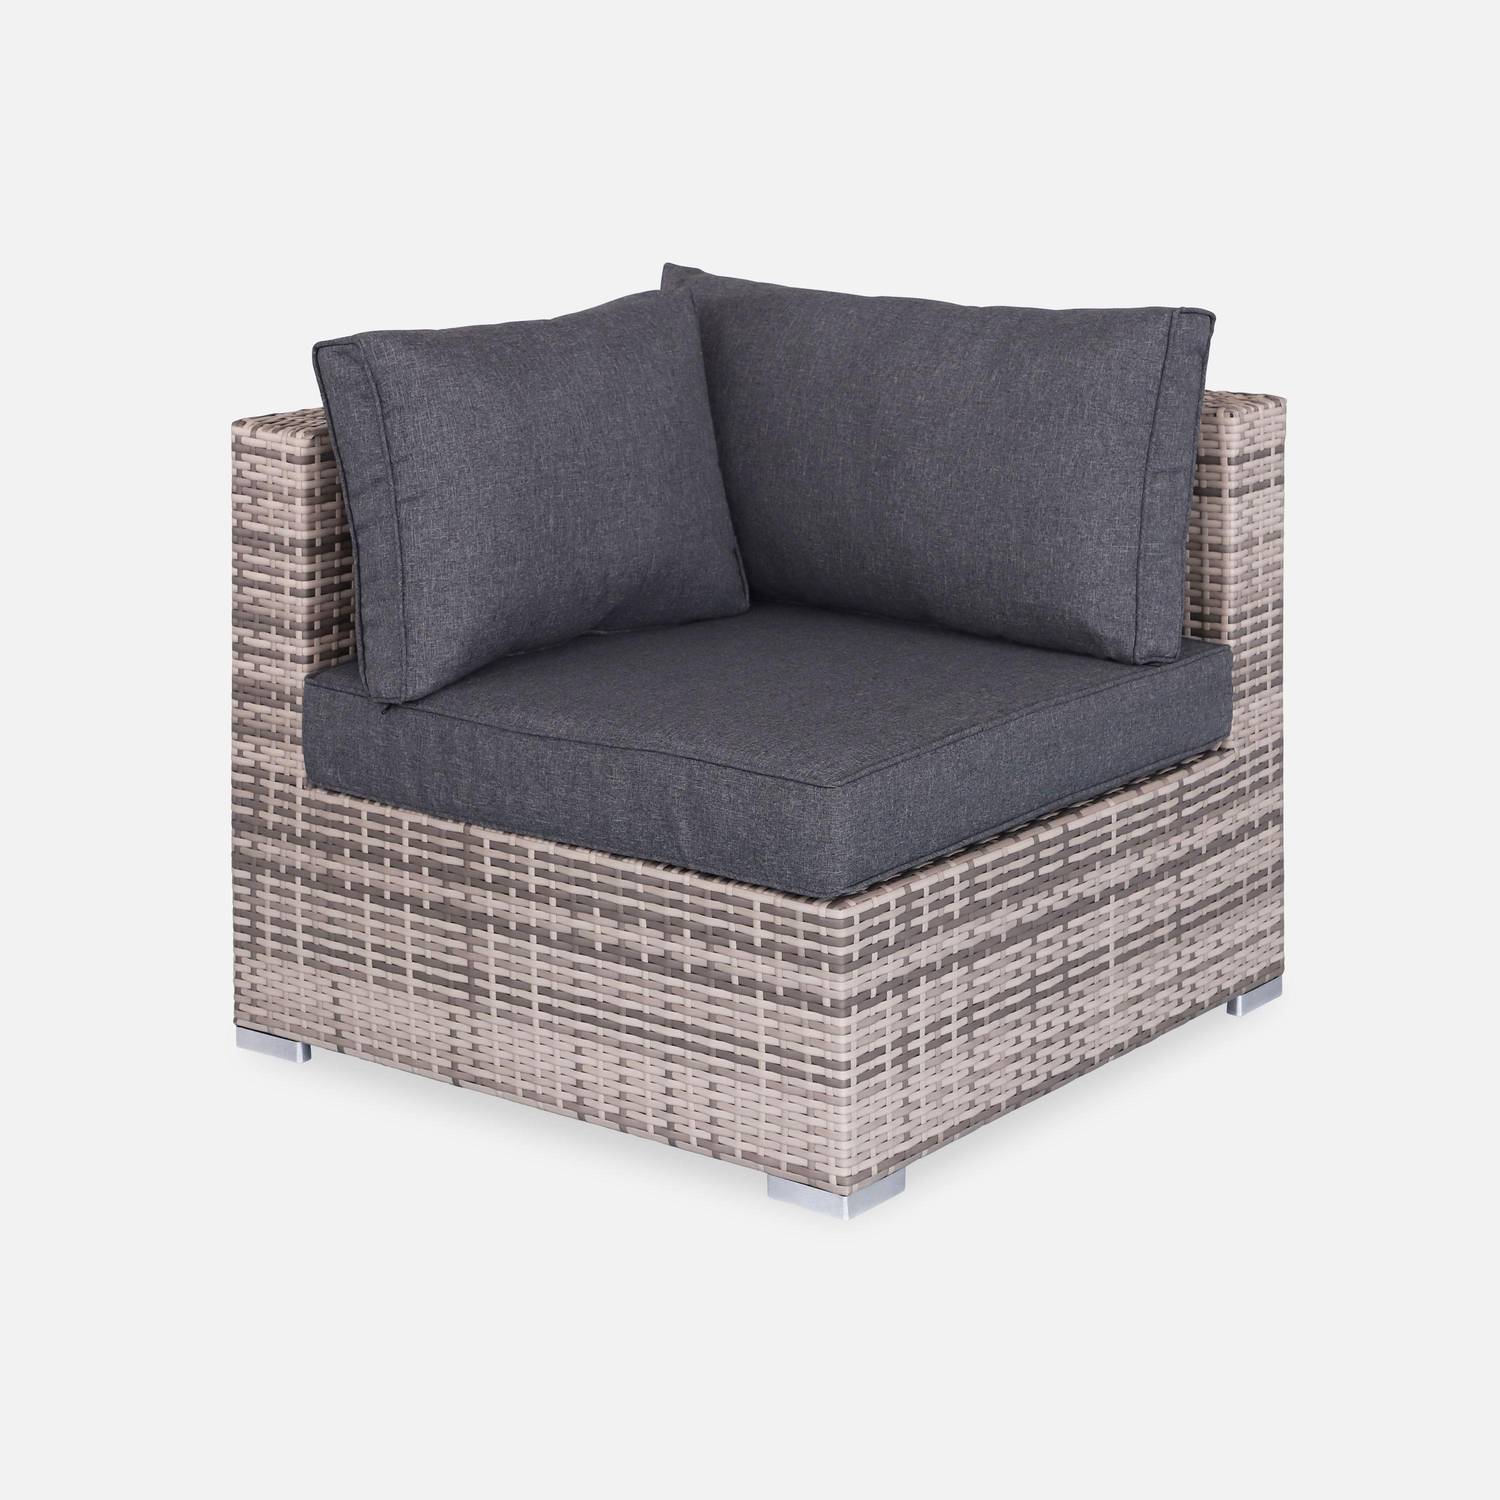 Ready assembled 5-seater polyrattan corner garden sofa set - sofa, coffee table - Napoli - Mixed Grey rattan, Grey cushions Photo4